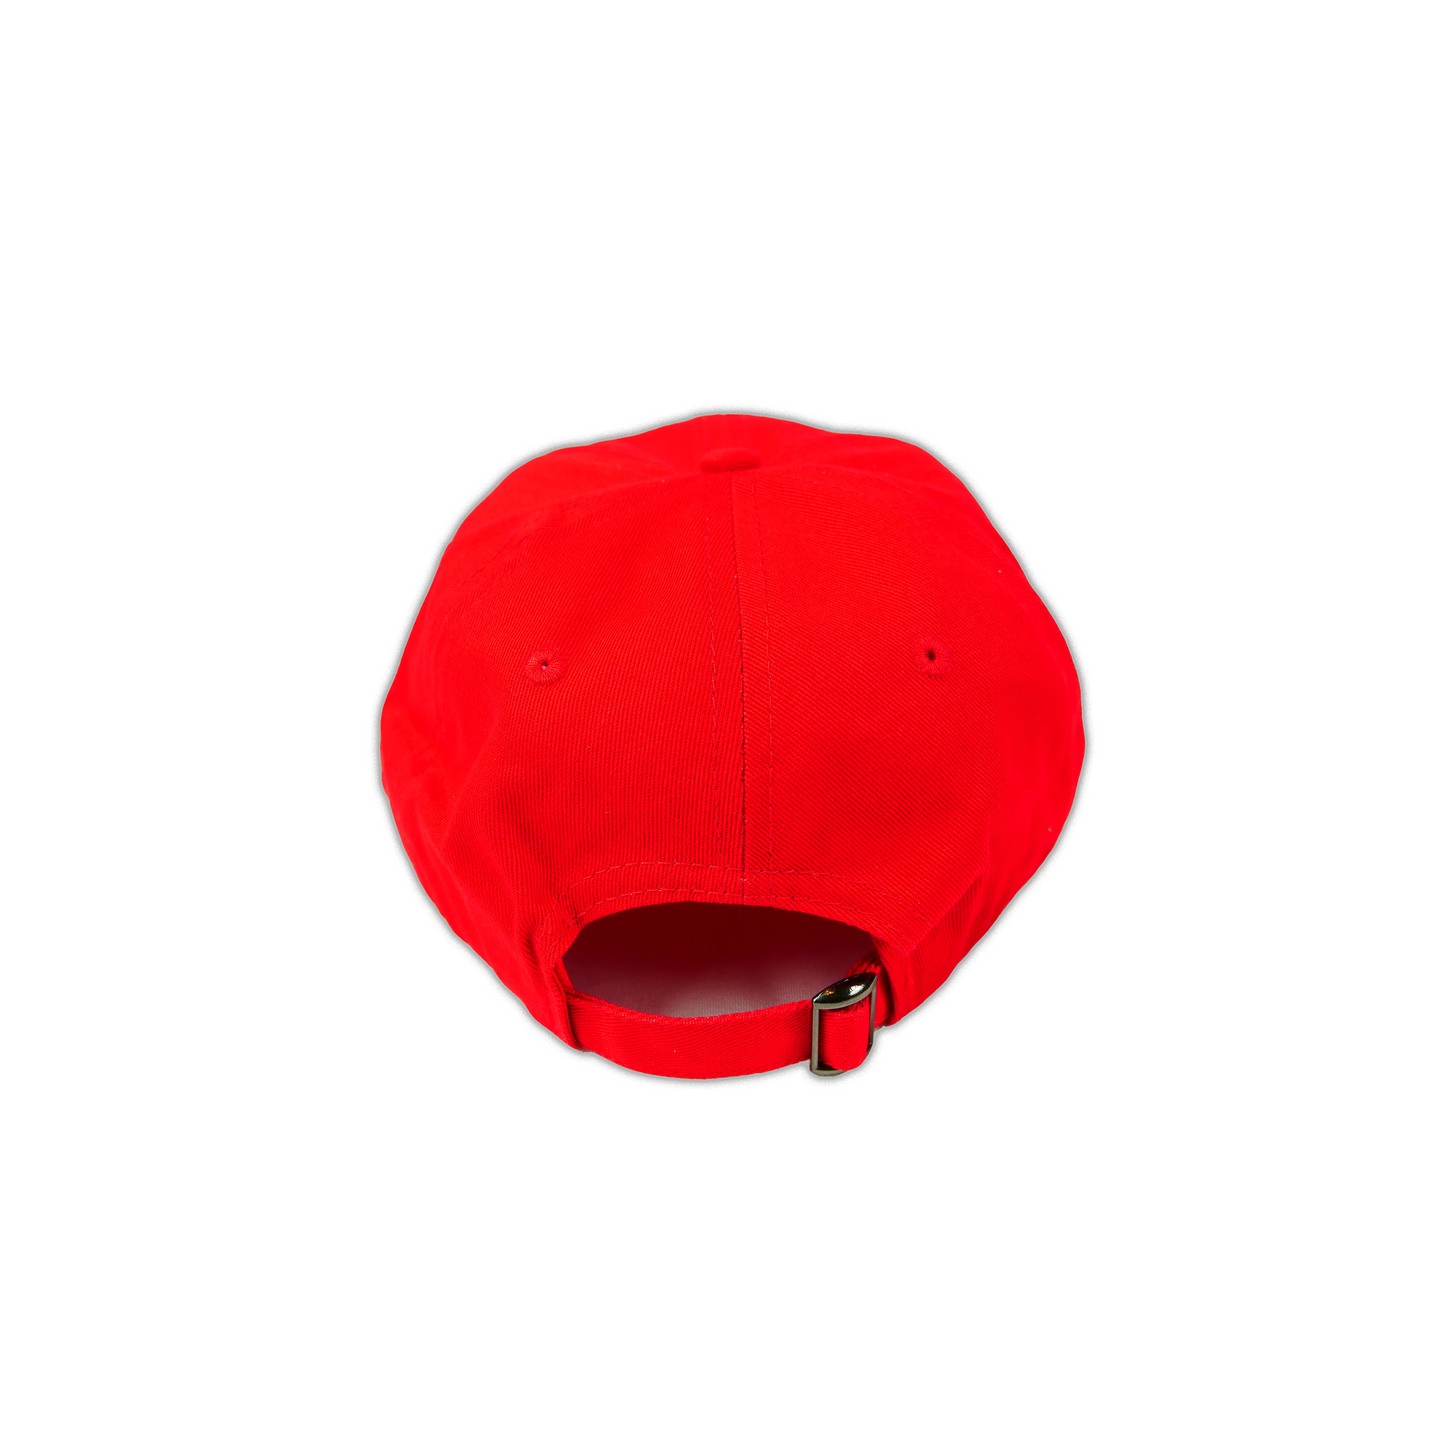 Bold Alief Dad Hat - Red/White